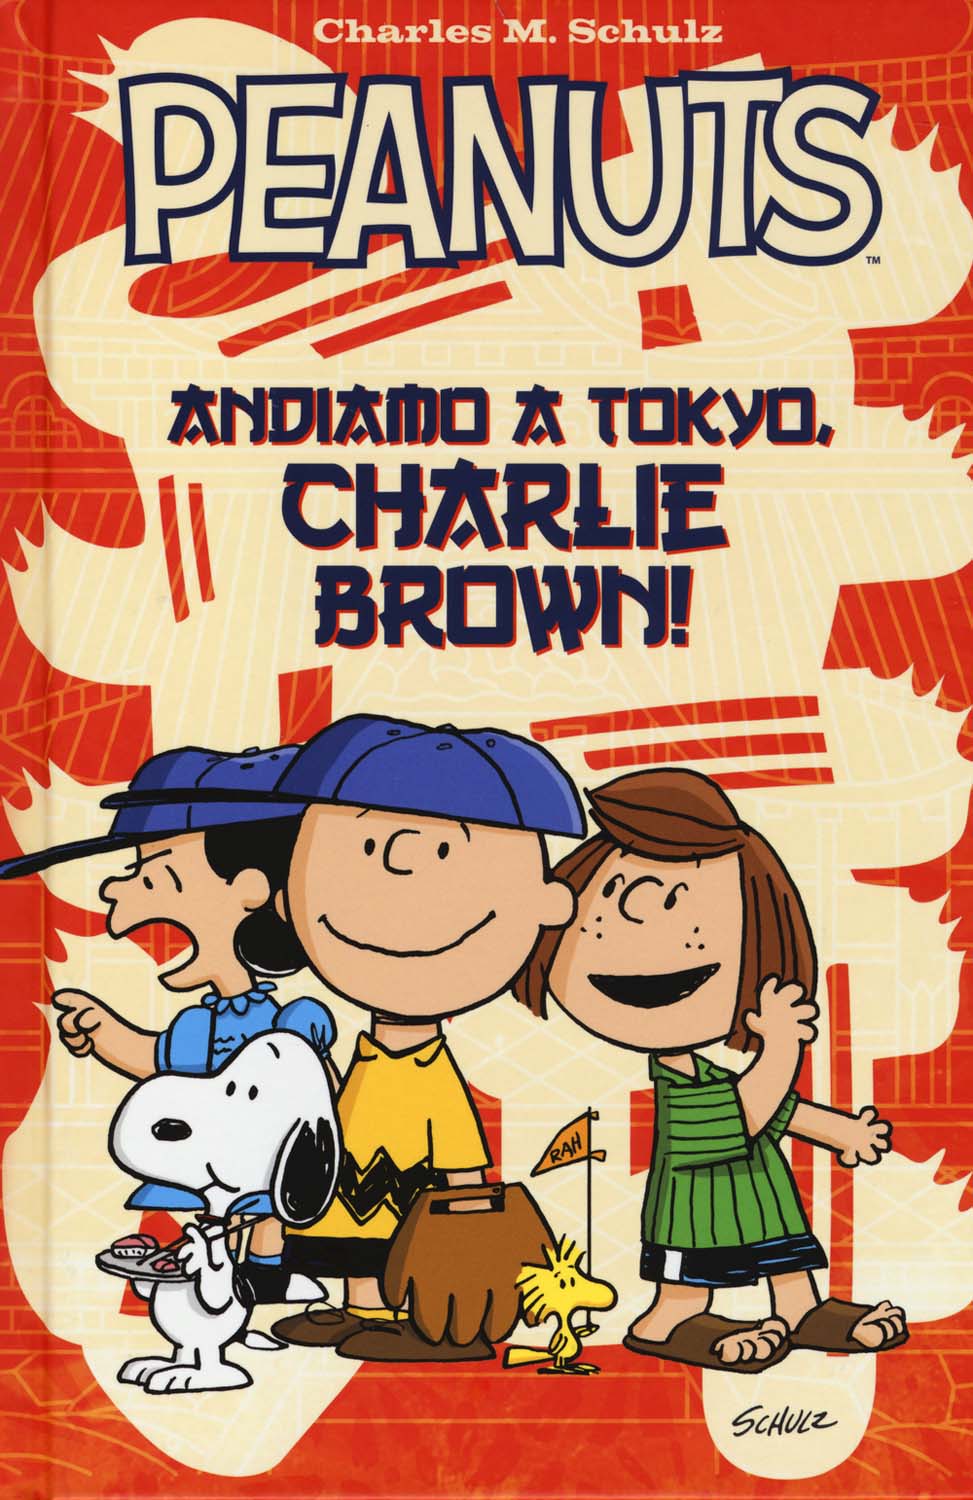 Charles M. Schulz - Peanuts. Andiamo A Tokyo, Charlie Brown!